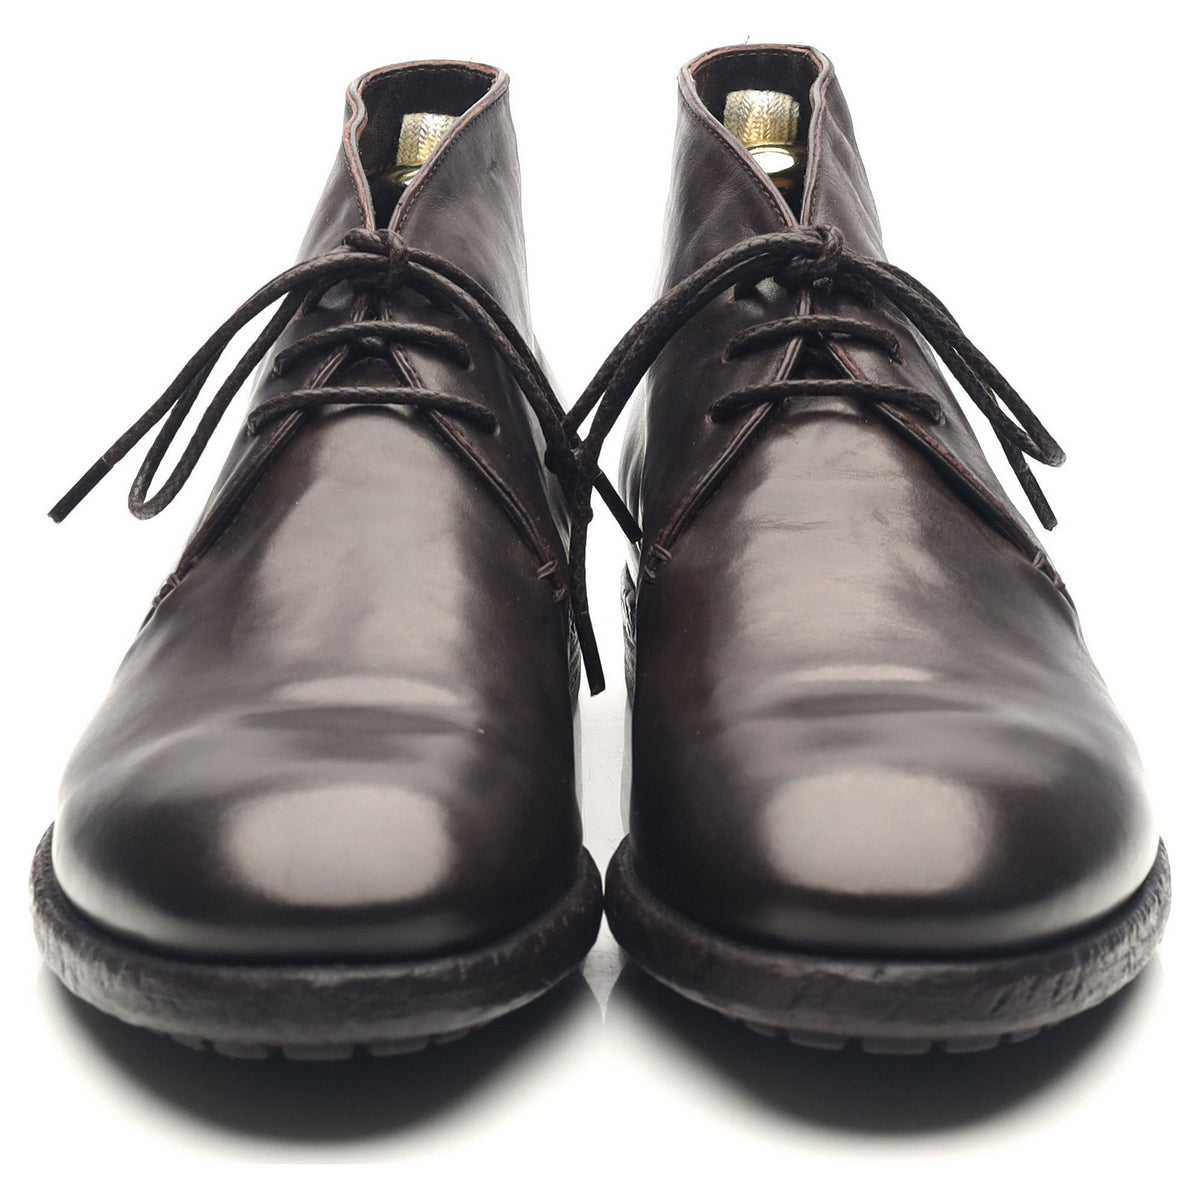 Dark Brown Leather Chukka Boots UK 6 EU 40